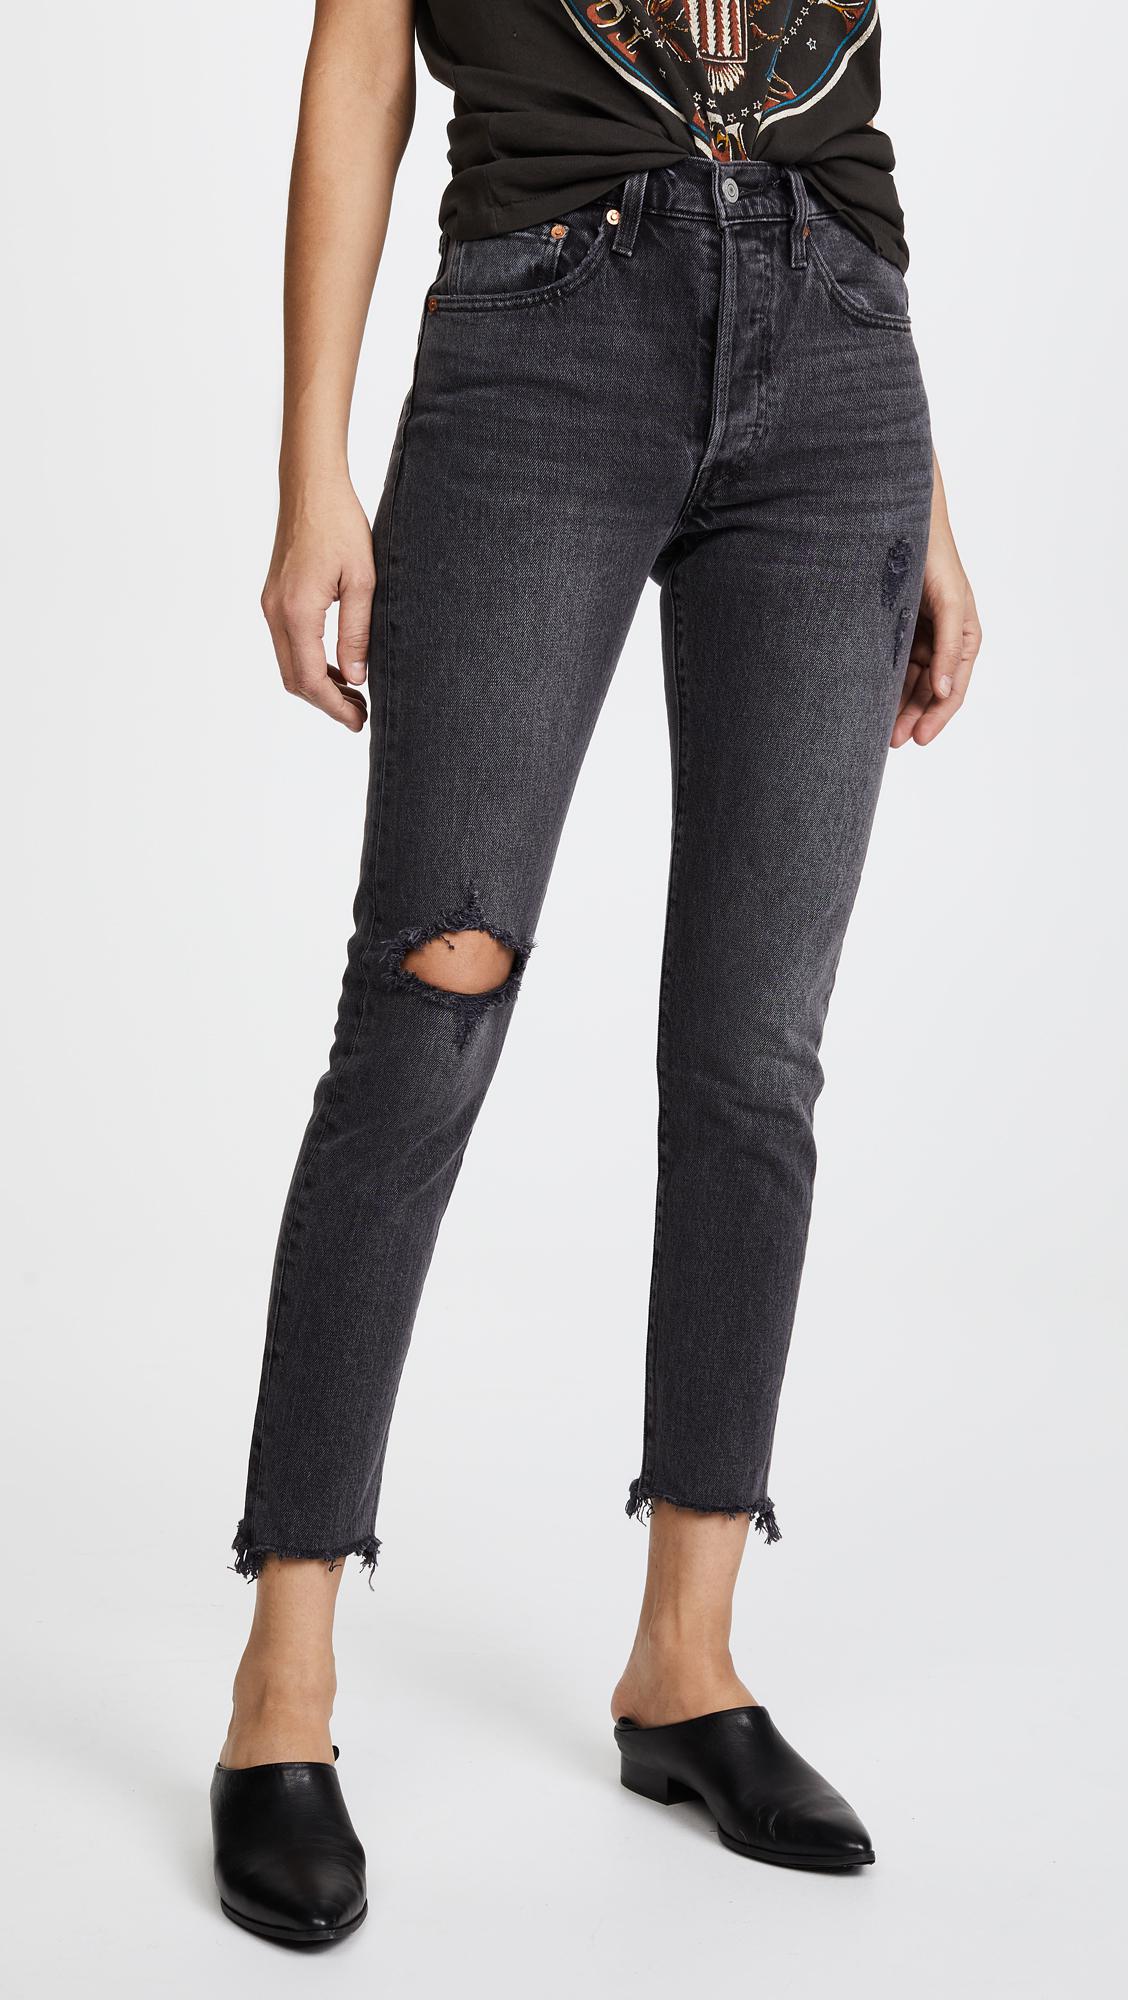 Levi's Denim 501 Stretch Skinny Jeans in Black - Lyst